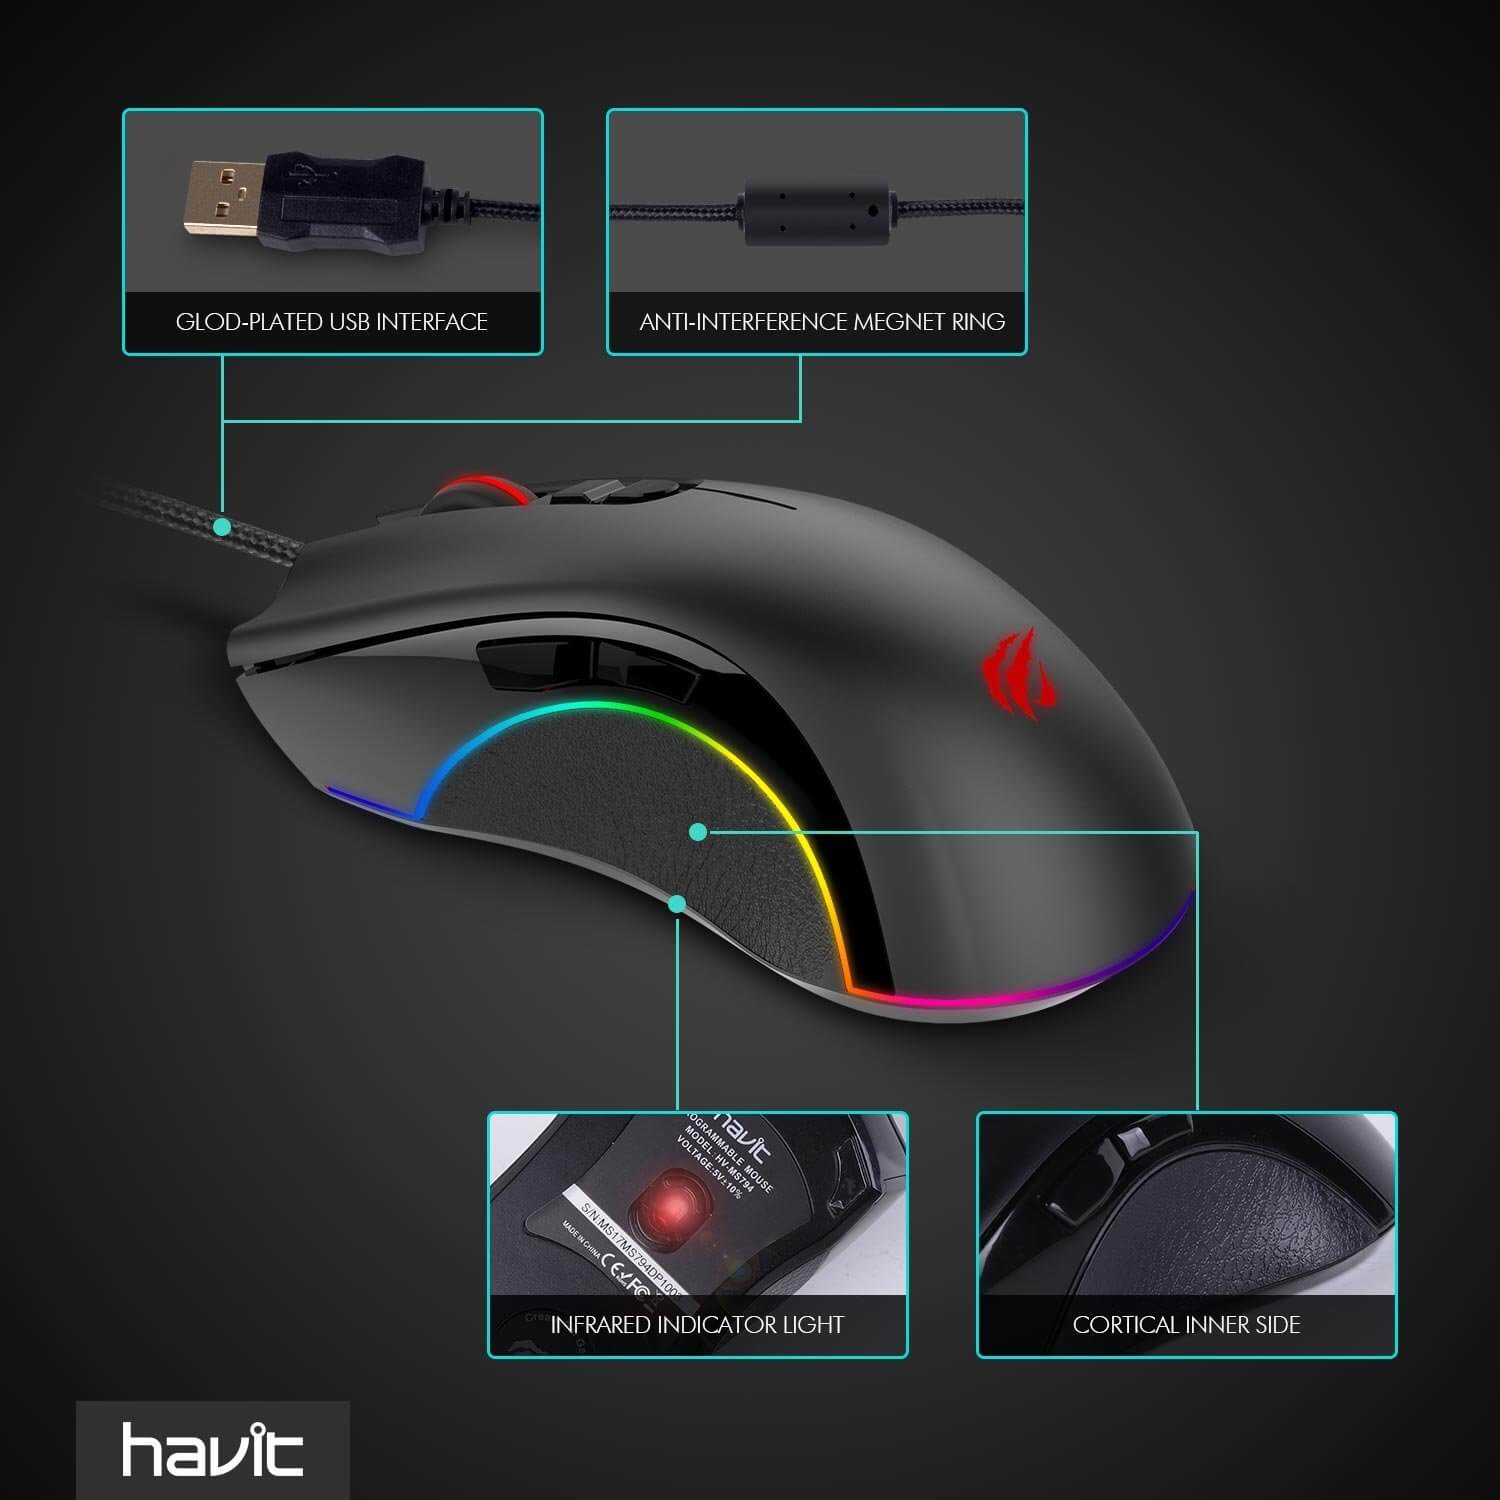 HAVIT HV-MS794 Programmable Gaming Mouse with 4000DPI & RGB Backlit